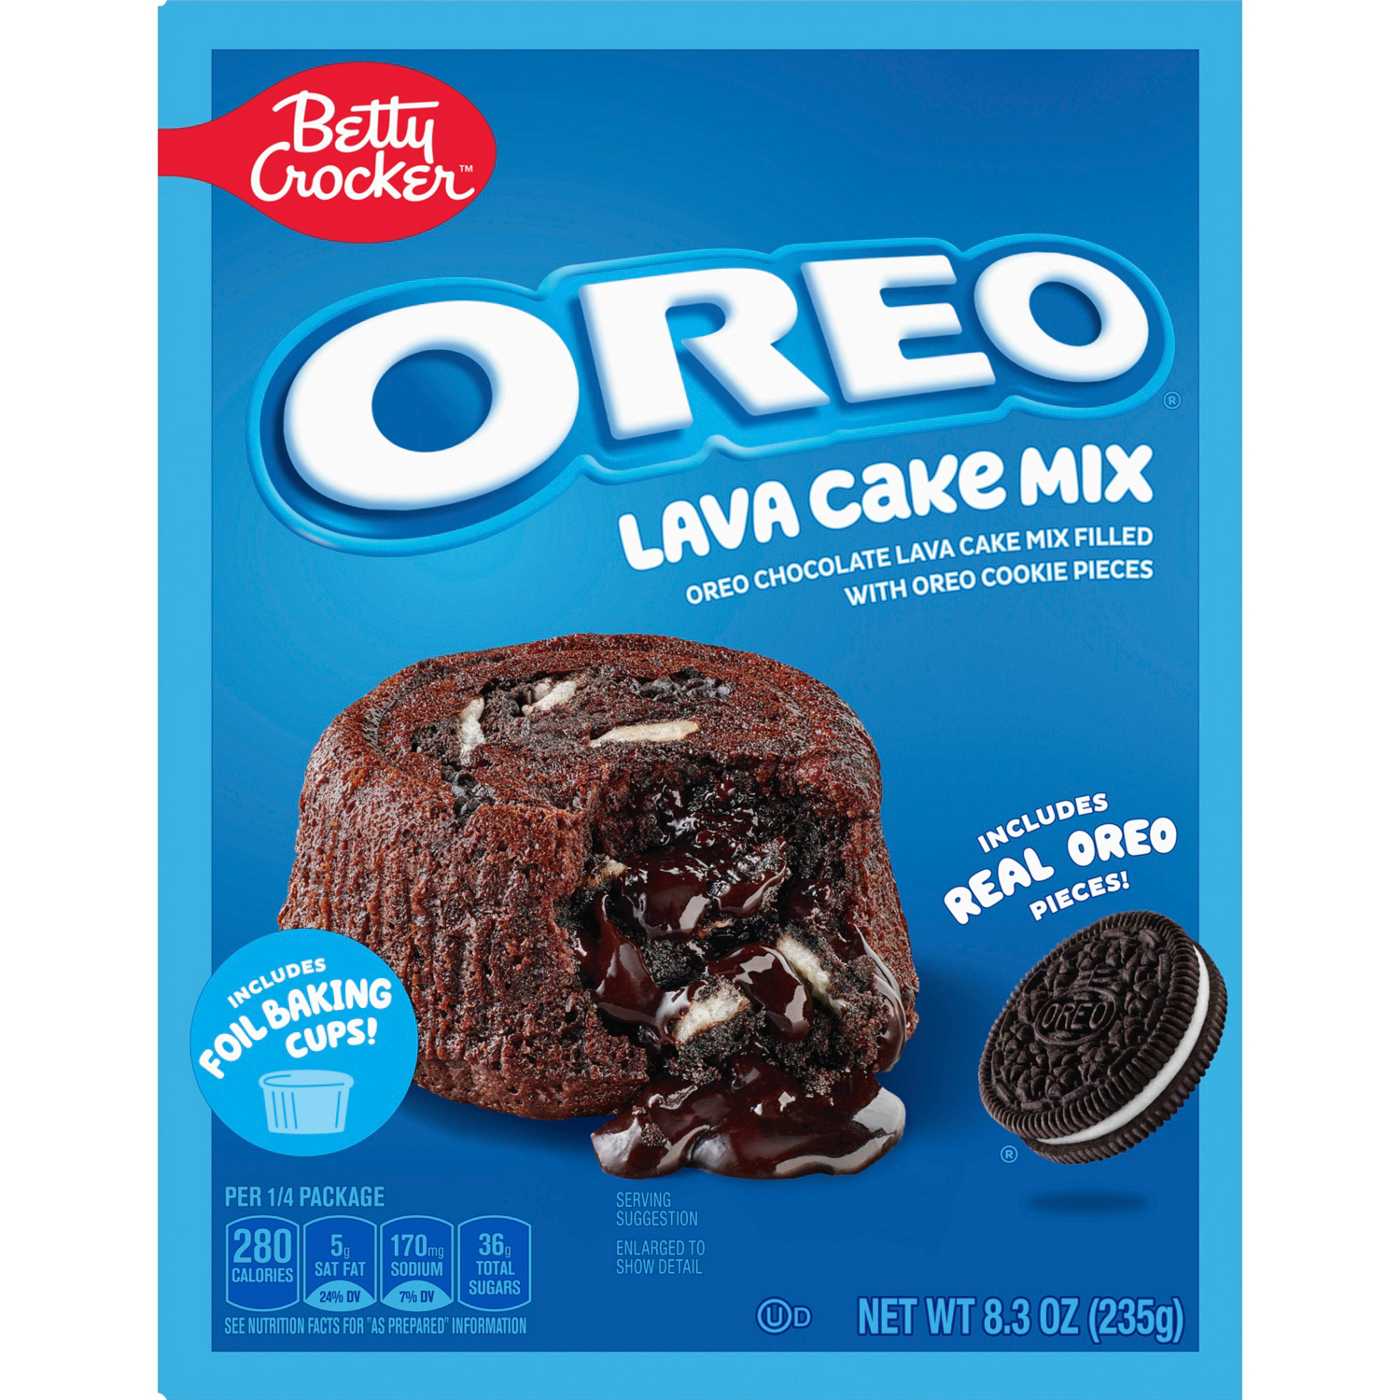 Betty Crocker Oreo Lava Cake Mix; image 1 of 4